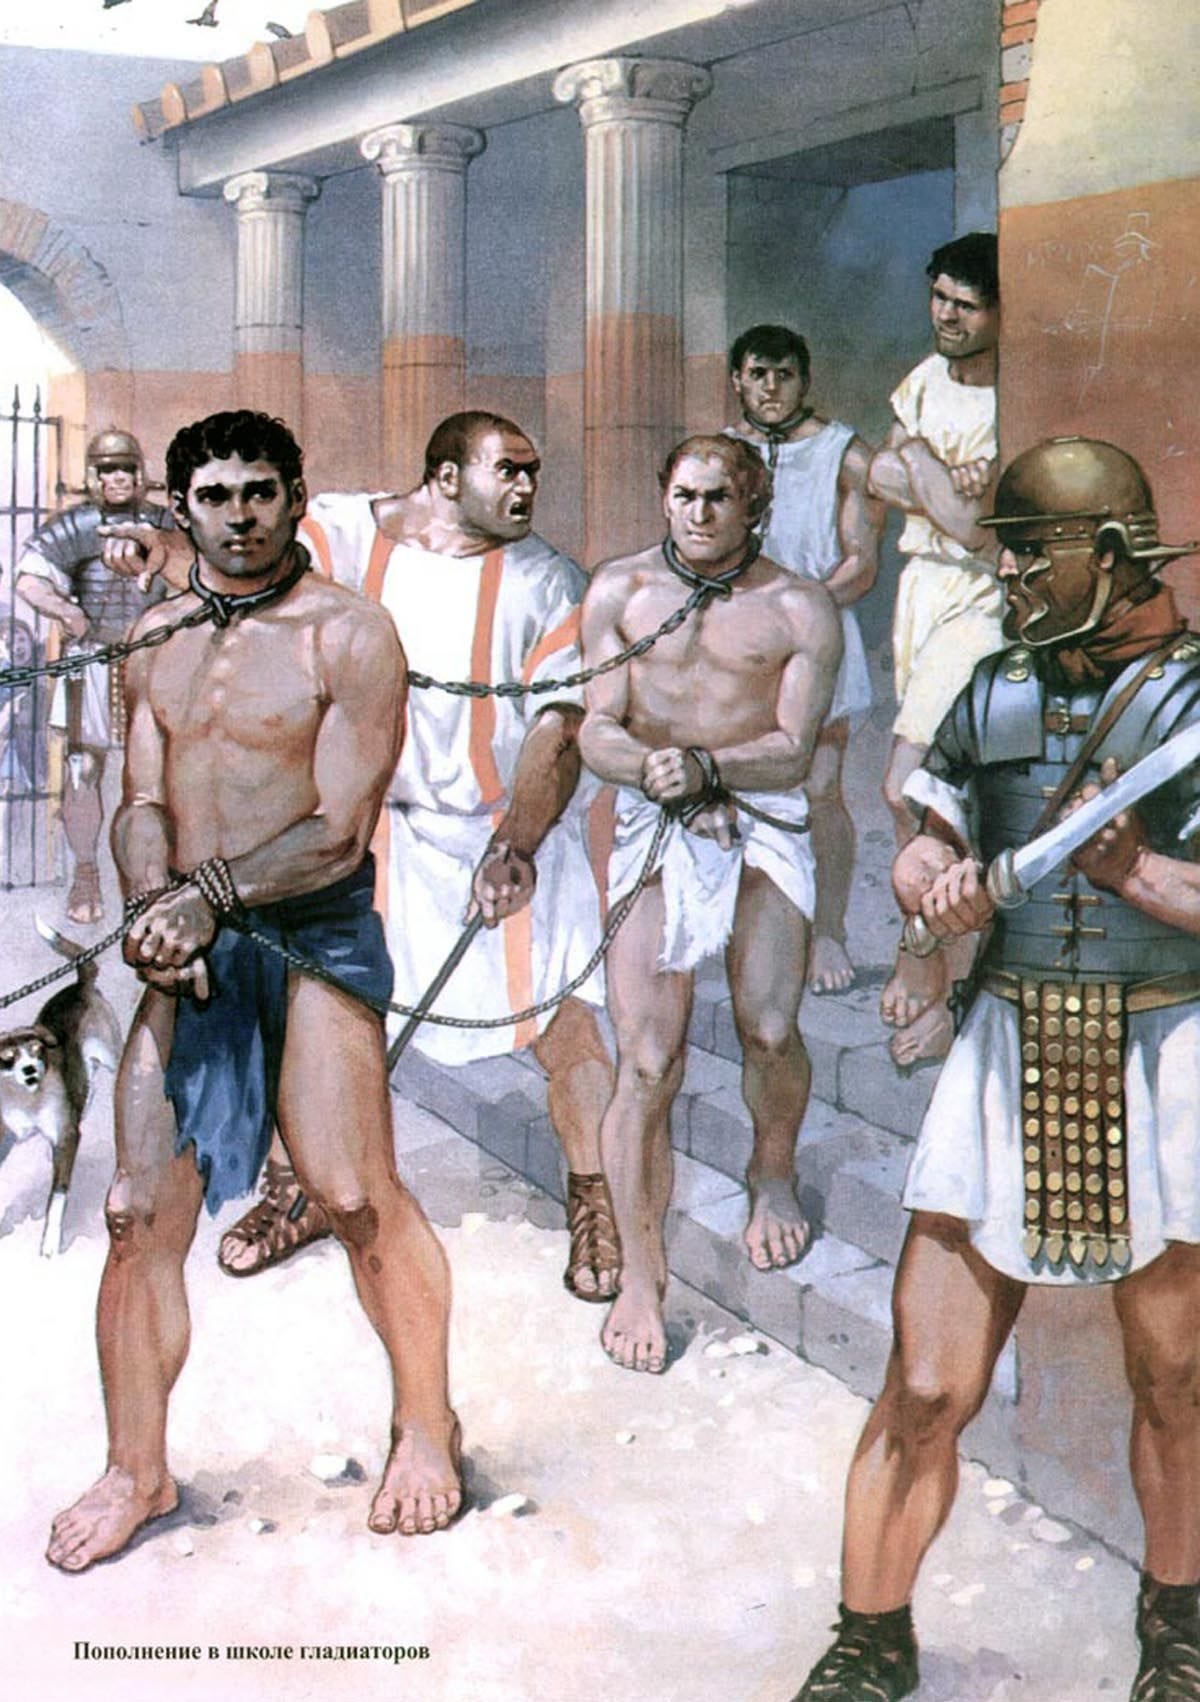 Slaves | Roman history, Ancient romans, Roman empire